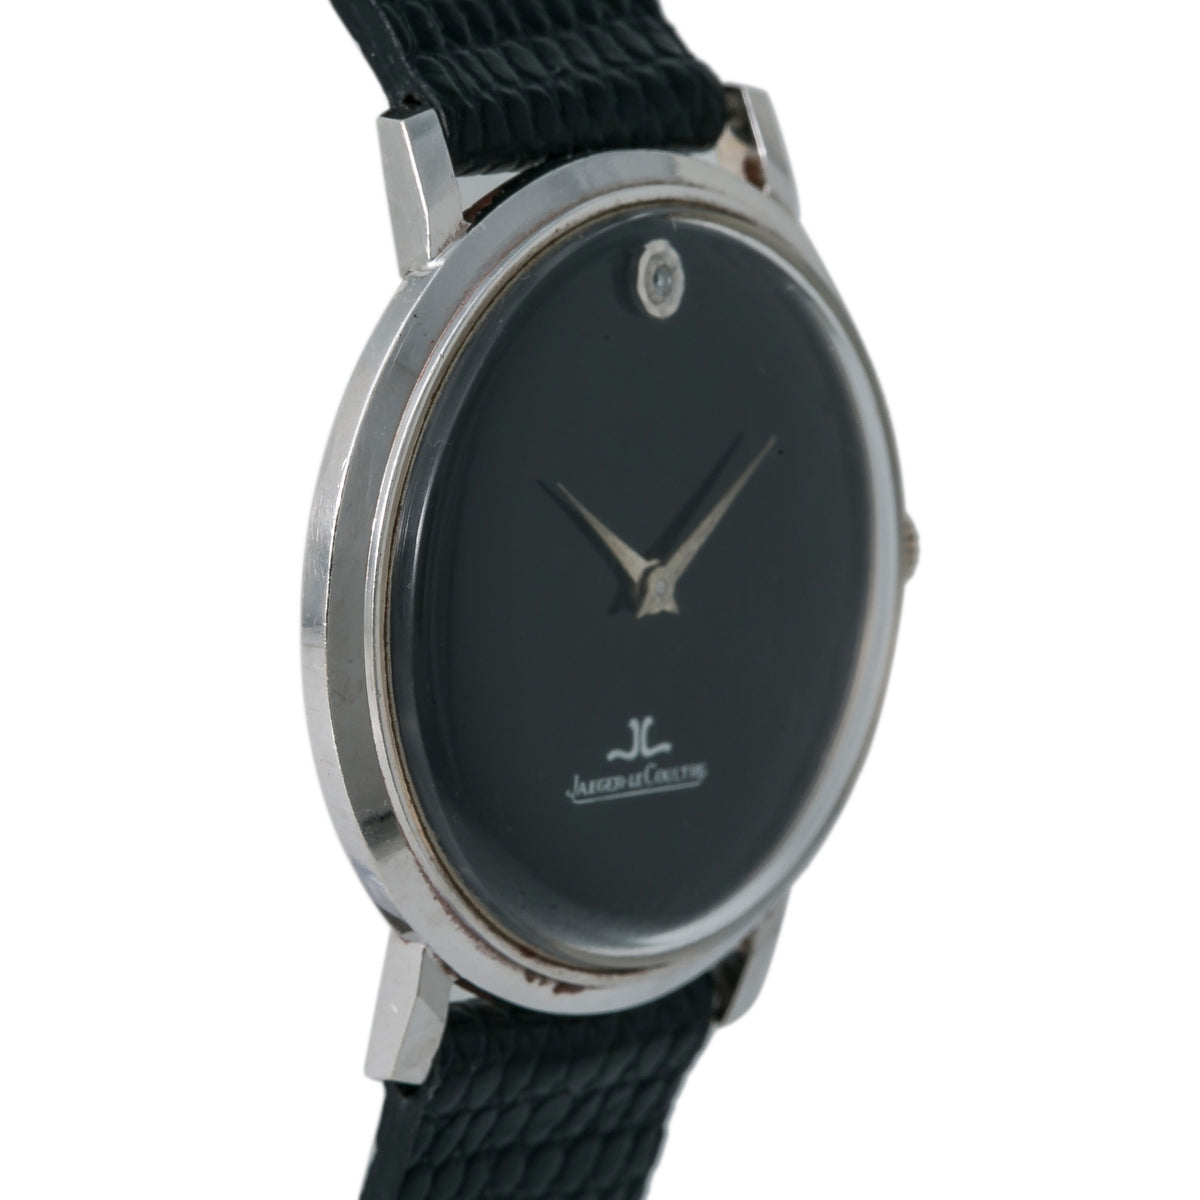 Jaeger LeCoultre Vintage Hand Wind Men's Watch 1 Diamond Dial 14k WhiteGold 33mm